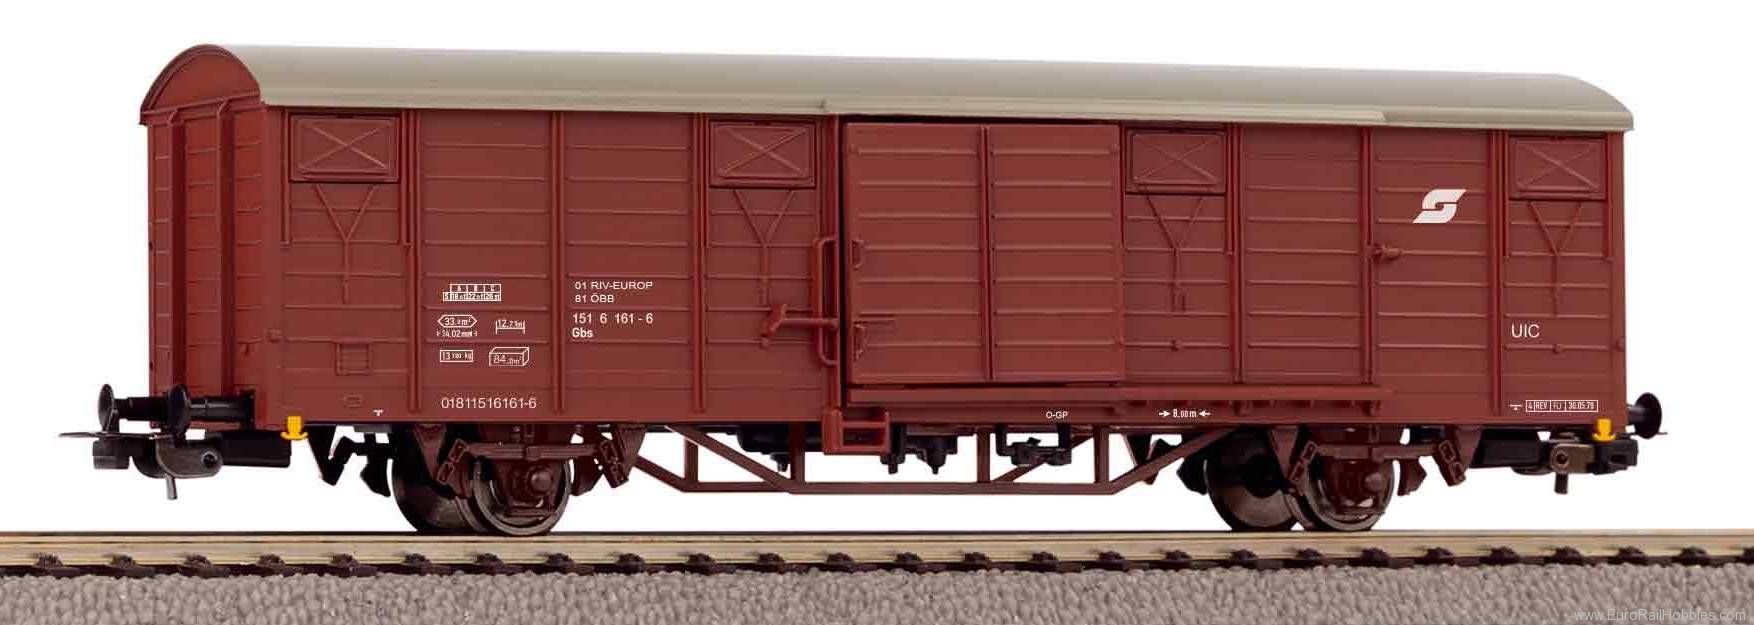 Piko 24519 Covered freight wagon Gbs A-BB IV (Piko Class